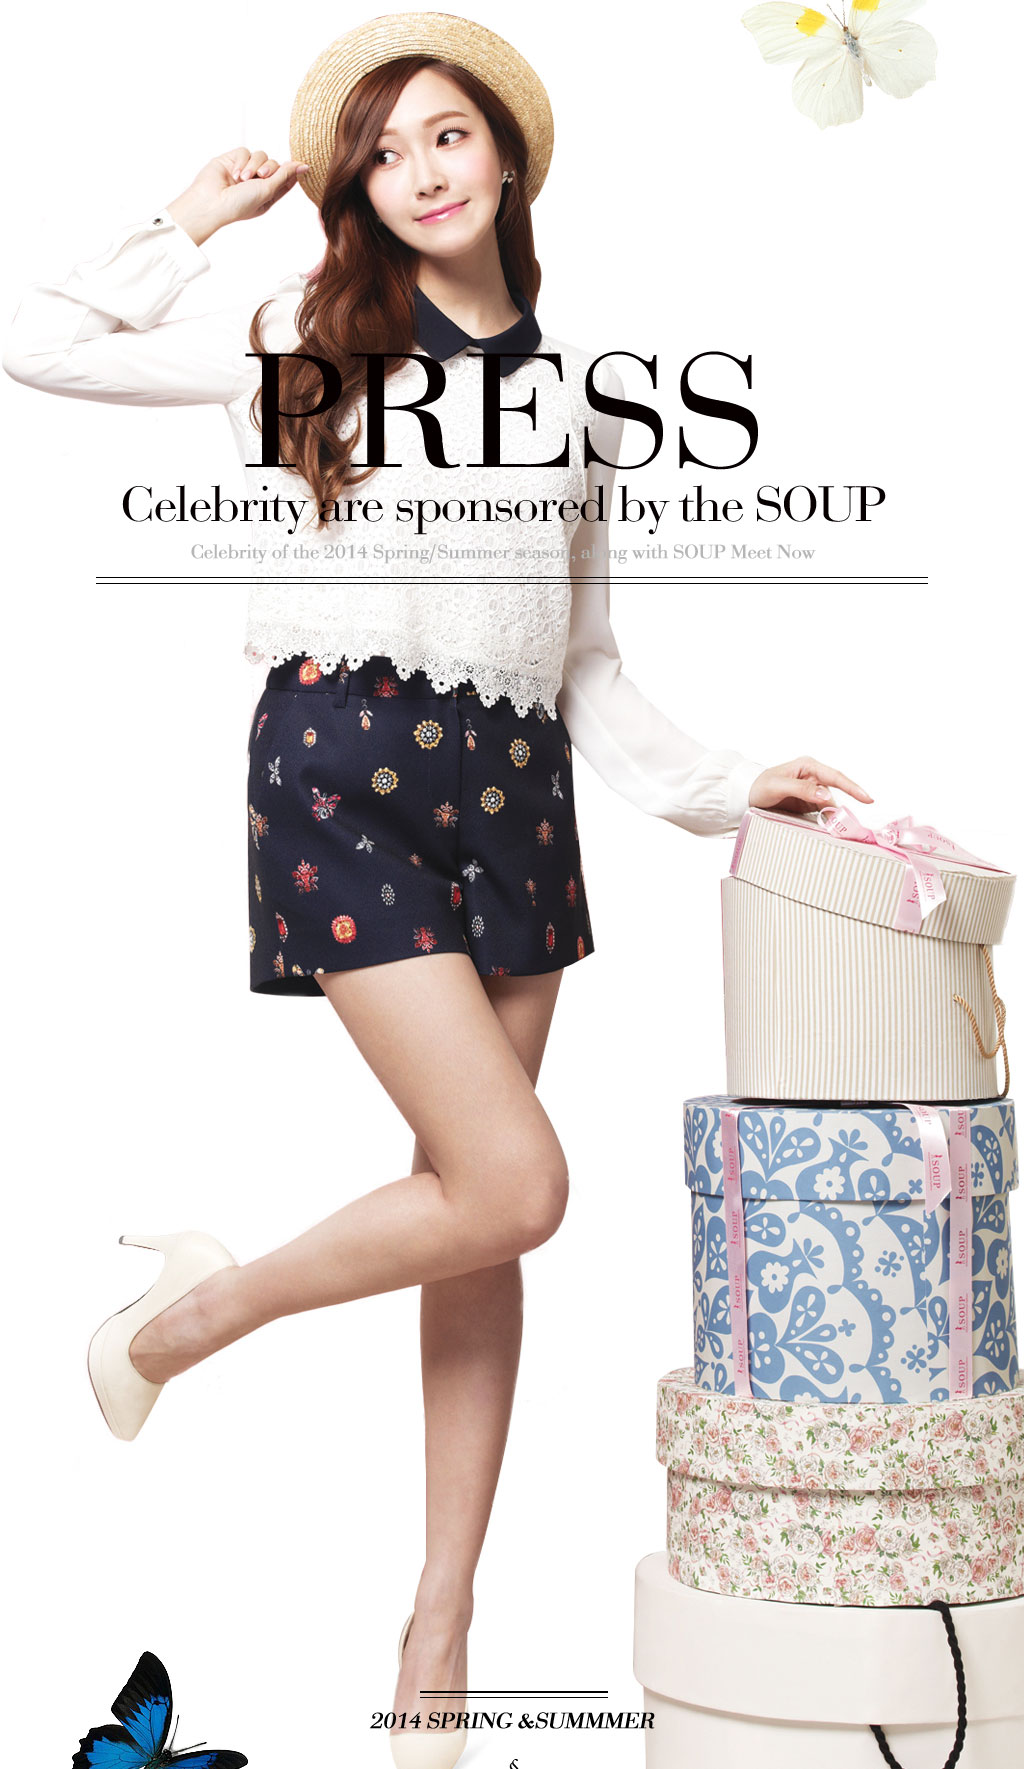 Jessica SOUP 2014 S/S website image